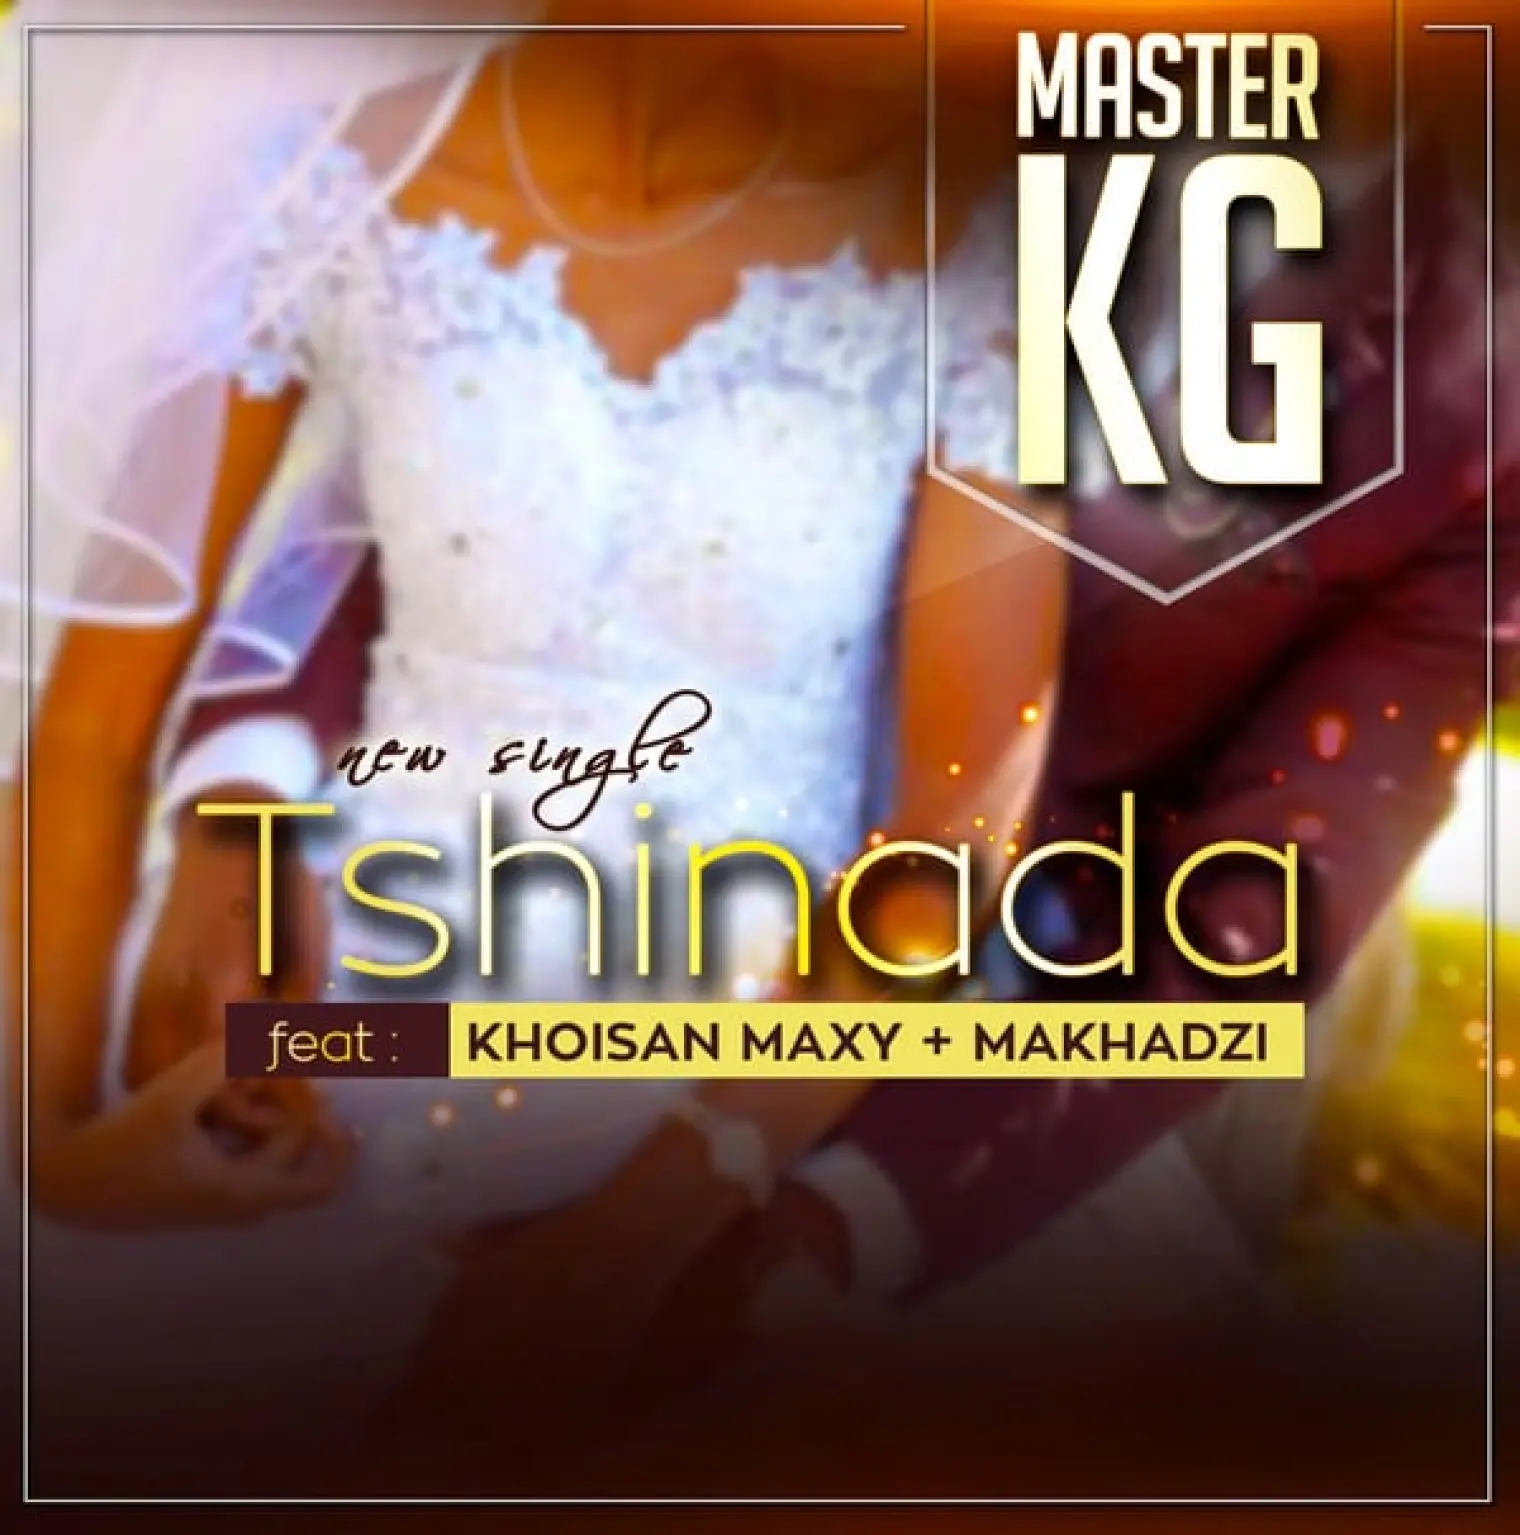 Tshinada (feat. Maxy & Makhadzi) -  Master KG 